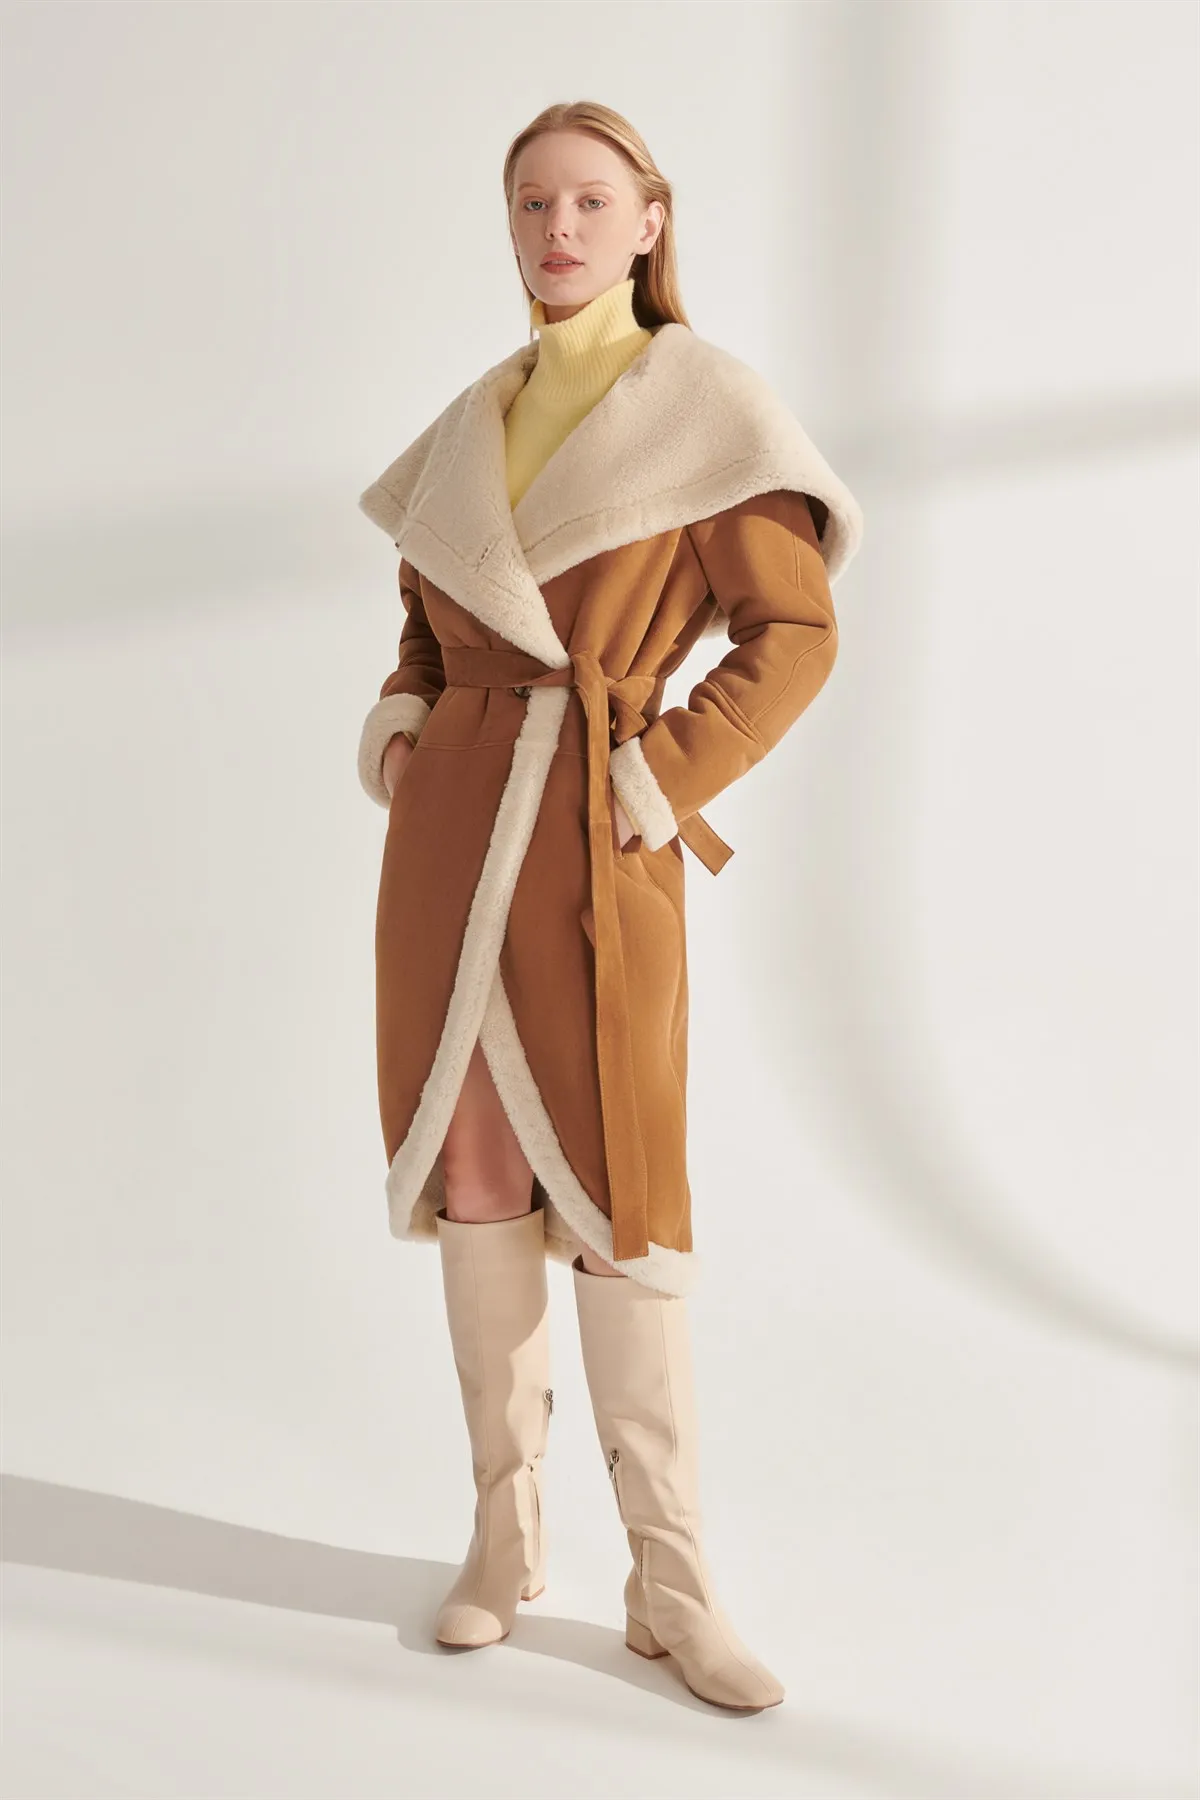 Genuine Fur Coats Women Brown Leather Jackets Sheepskin Handmade From Turkey Winter Warm Natural Wool Parkas New Year Fashion